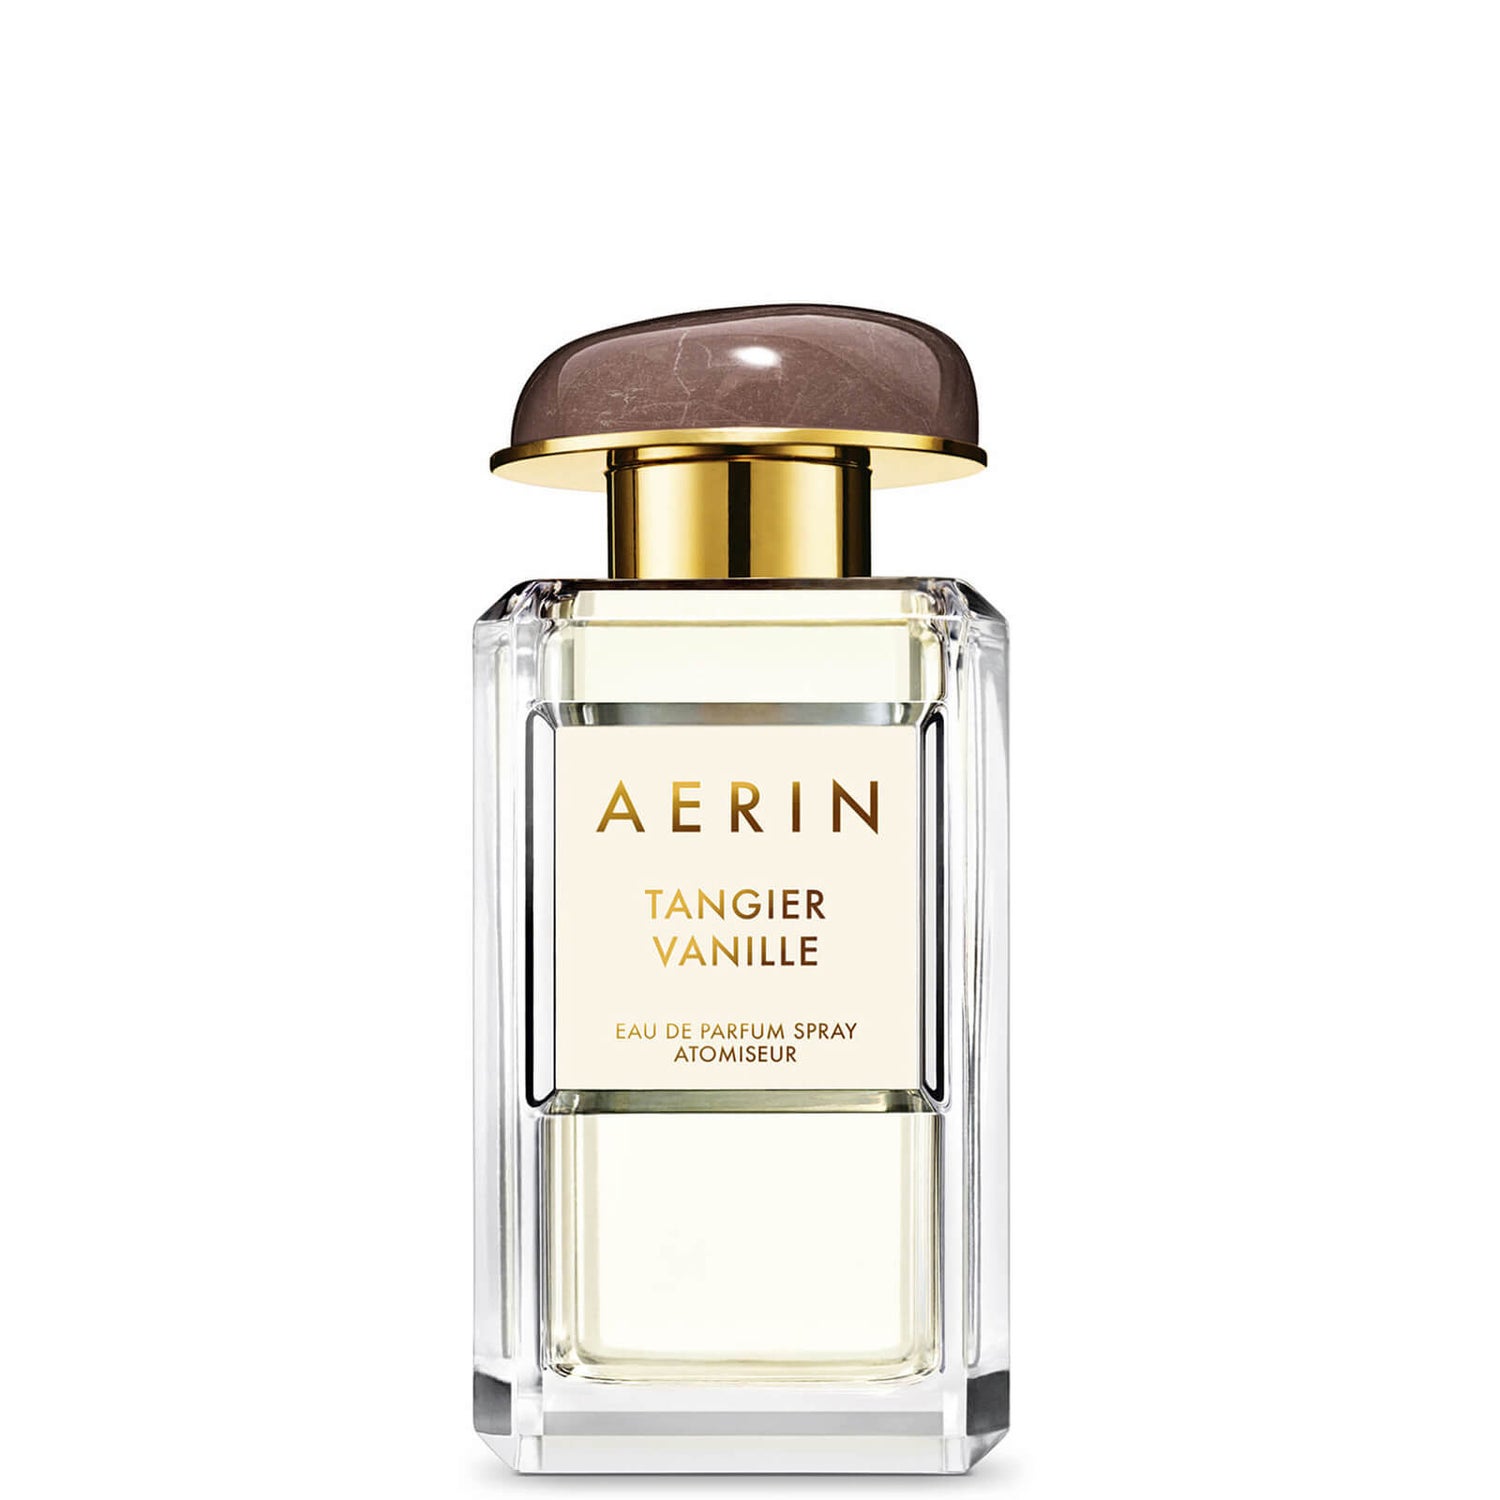 AERIN Tangier Vanille Eau de Parfum - 50ml